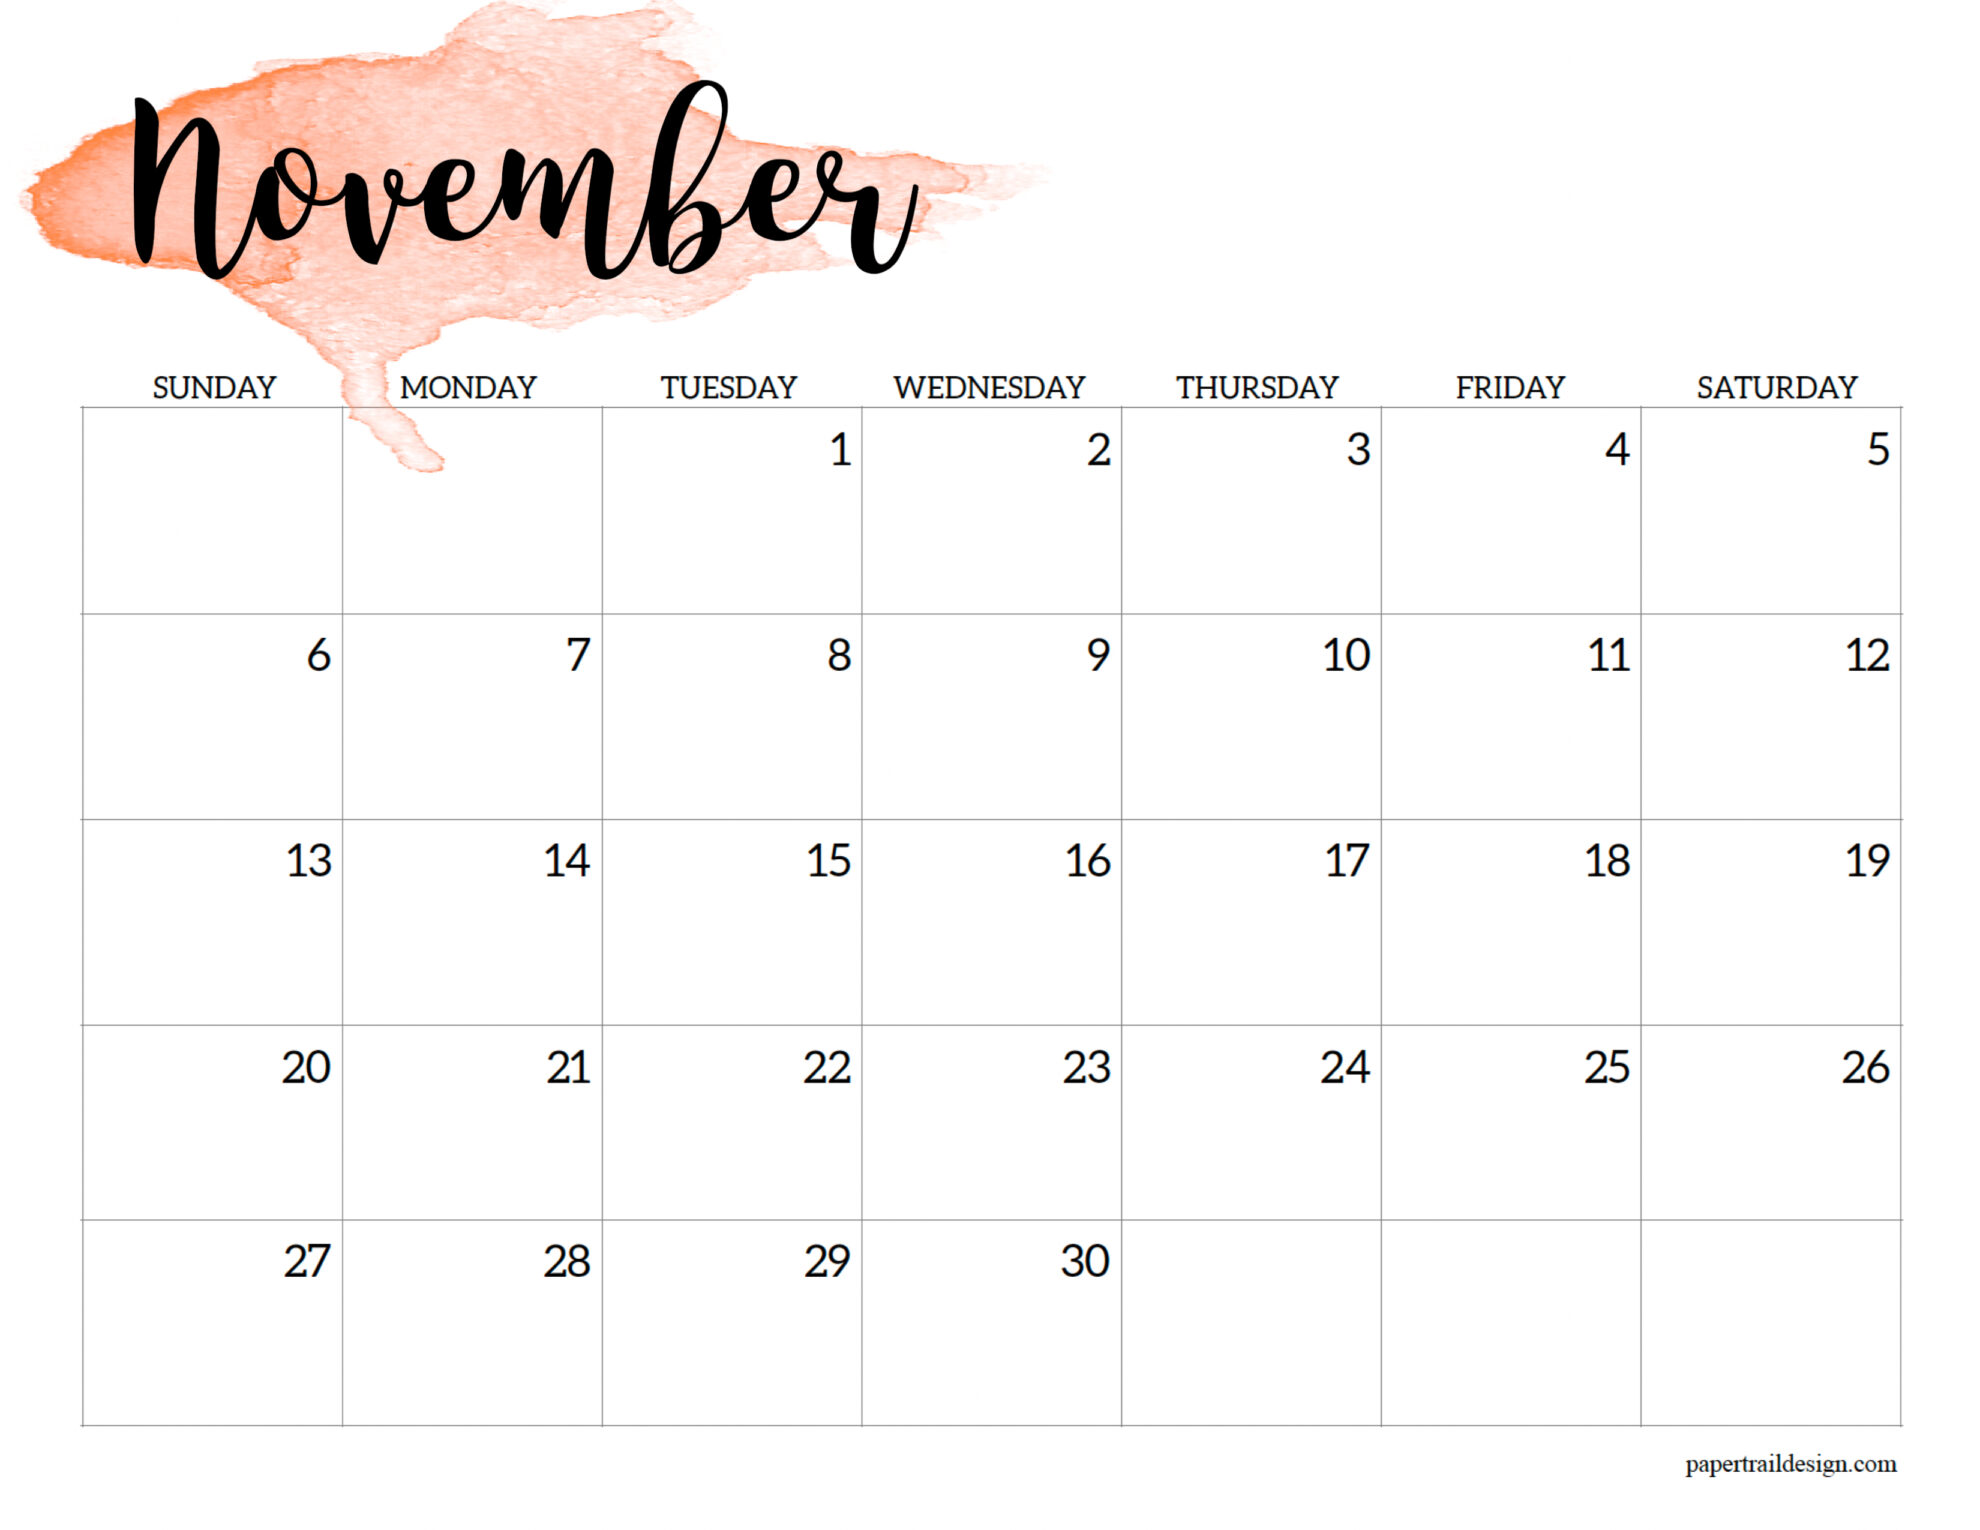 November 2022 Printable Calendar 2022 Calendar Printable - Watercolor - Paper Trail Design